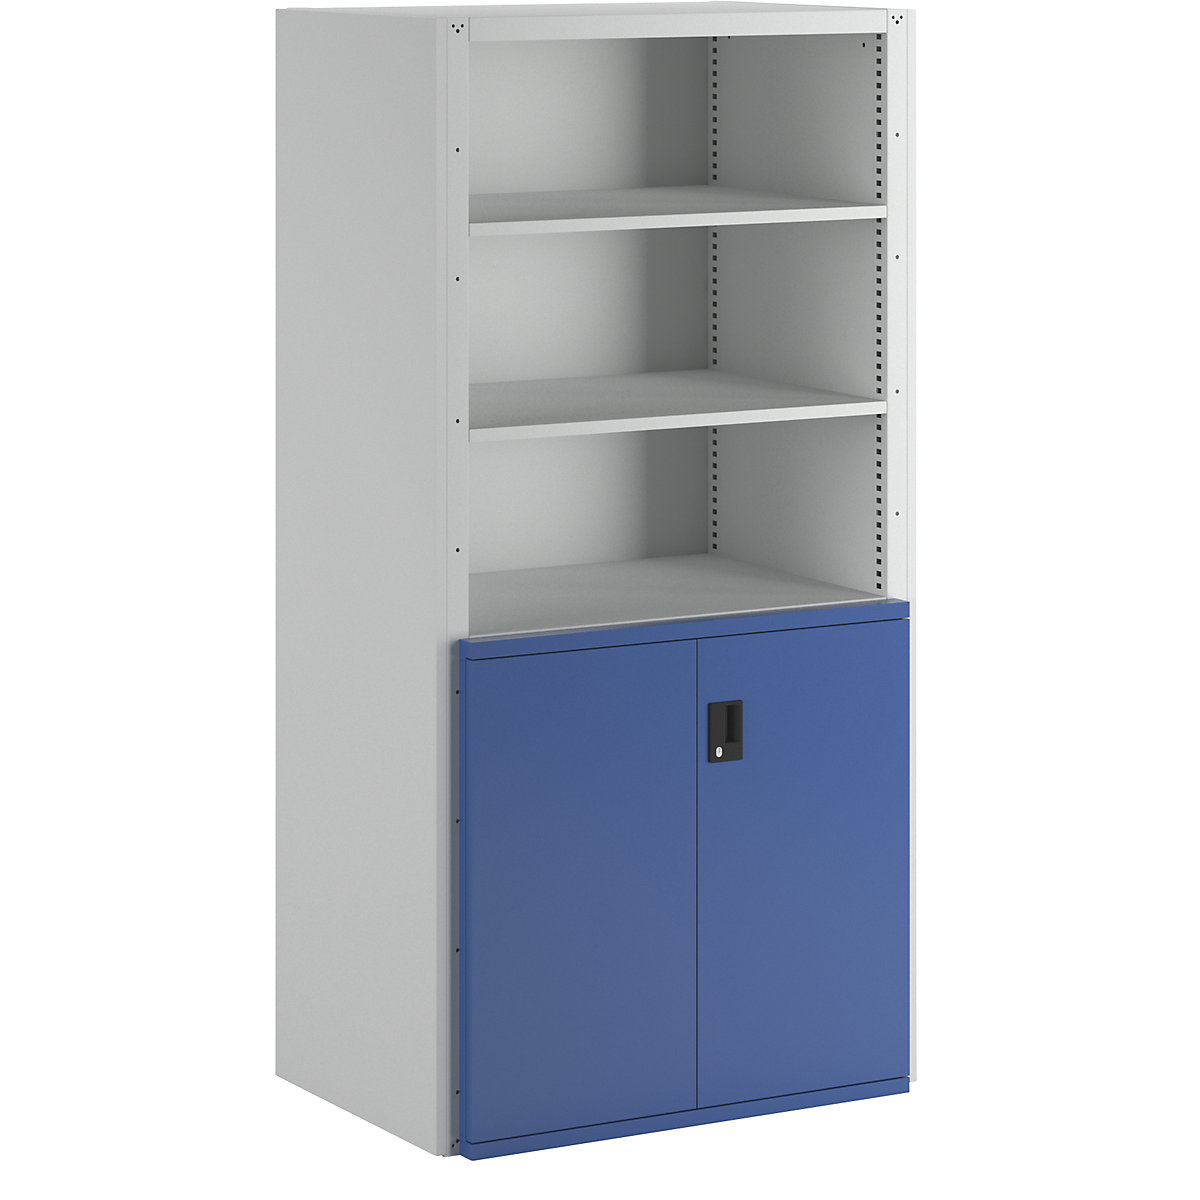 Drawer shelf unit – LISTA, 3 universal shelves, 2 adjustable shelves, 2 pull-out shelves (75 kg), standard shelf unit-10